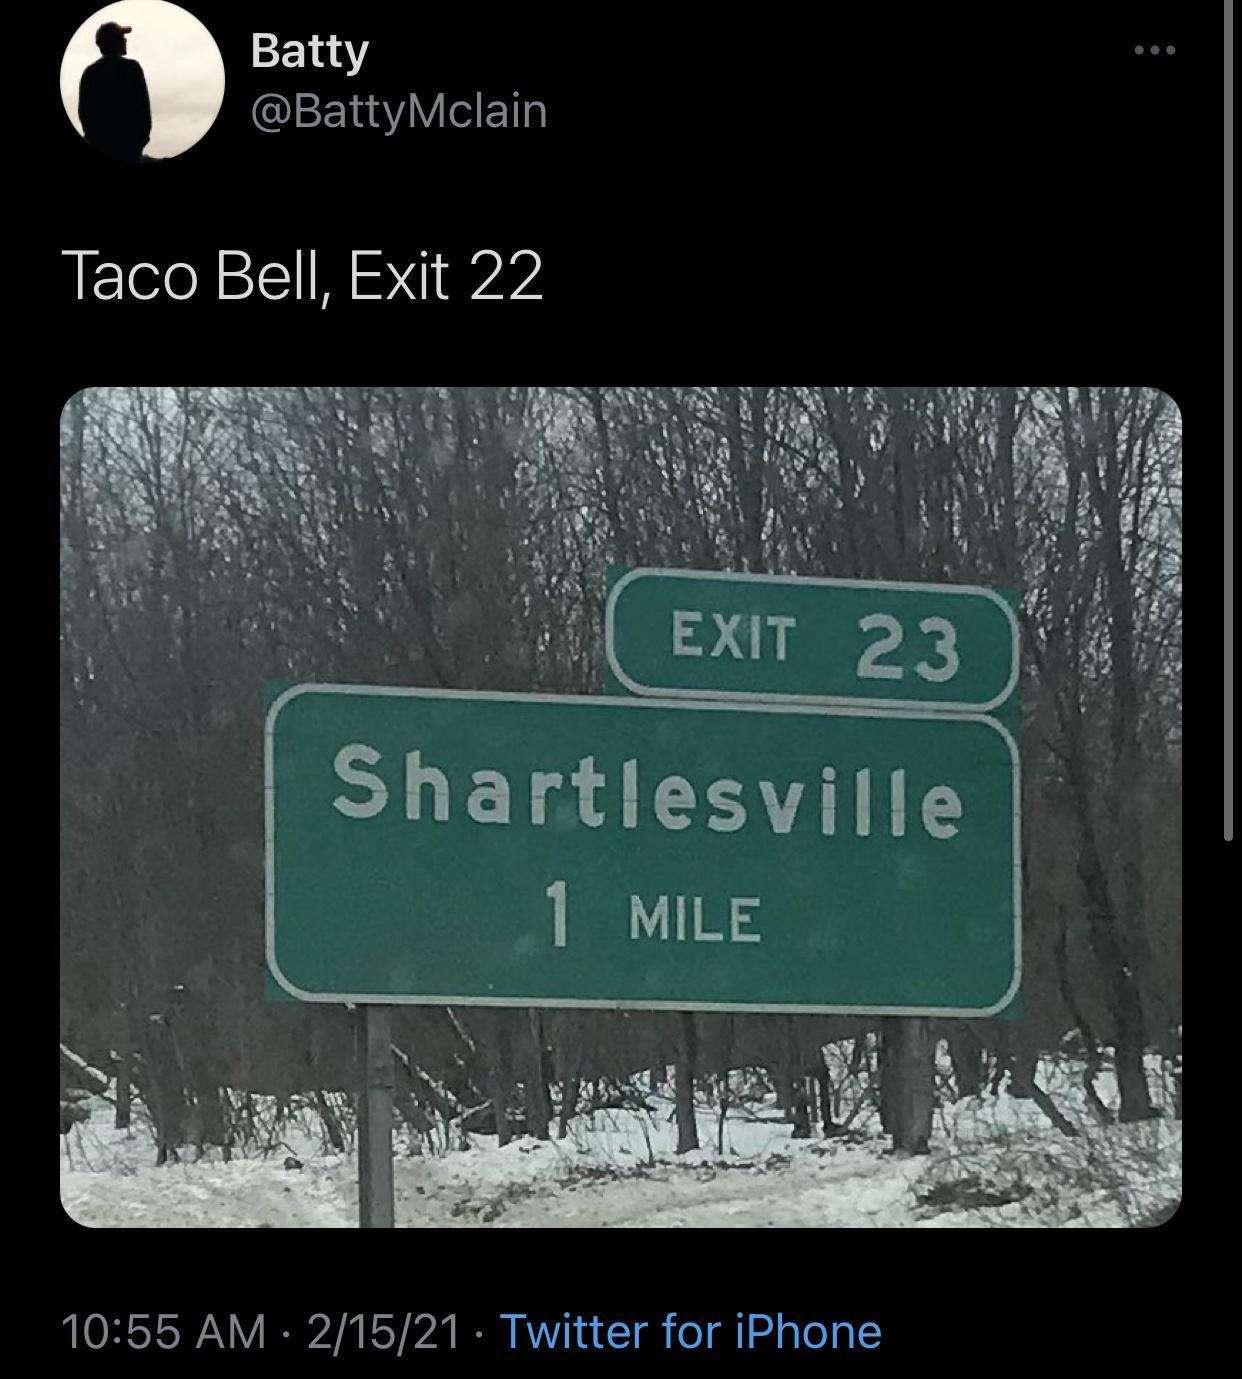 taco bell headquarters ahead